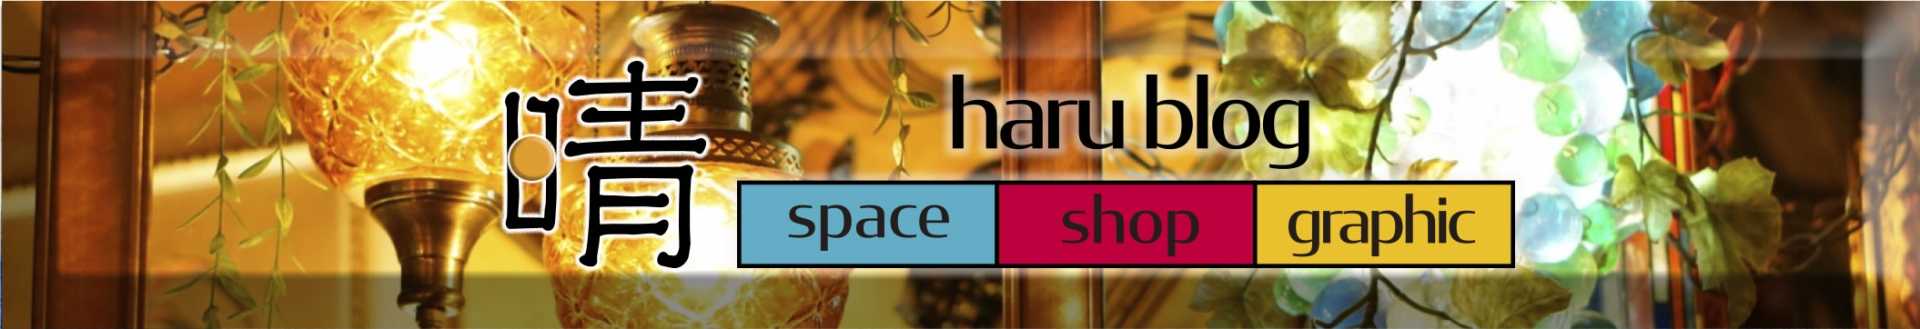 haru blog